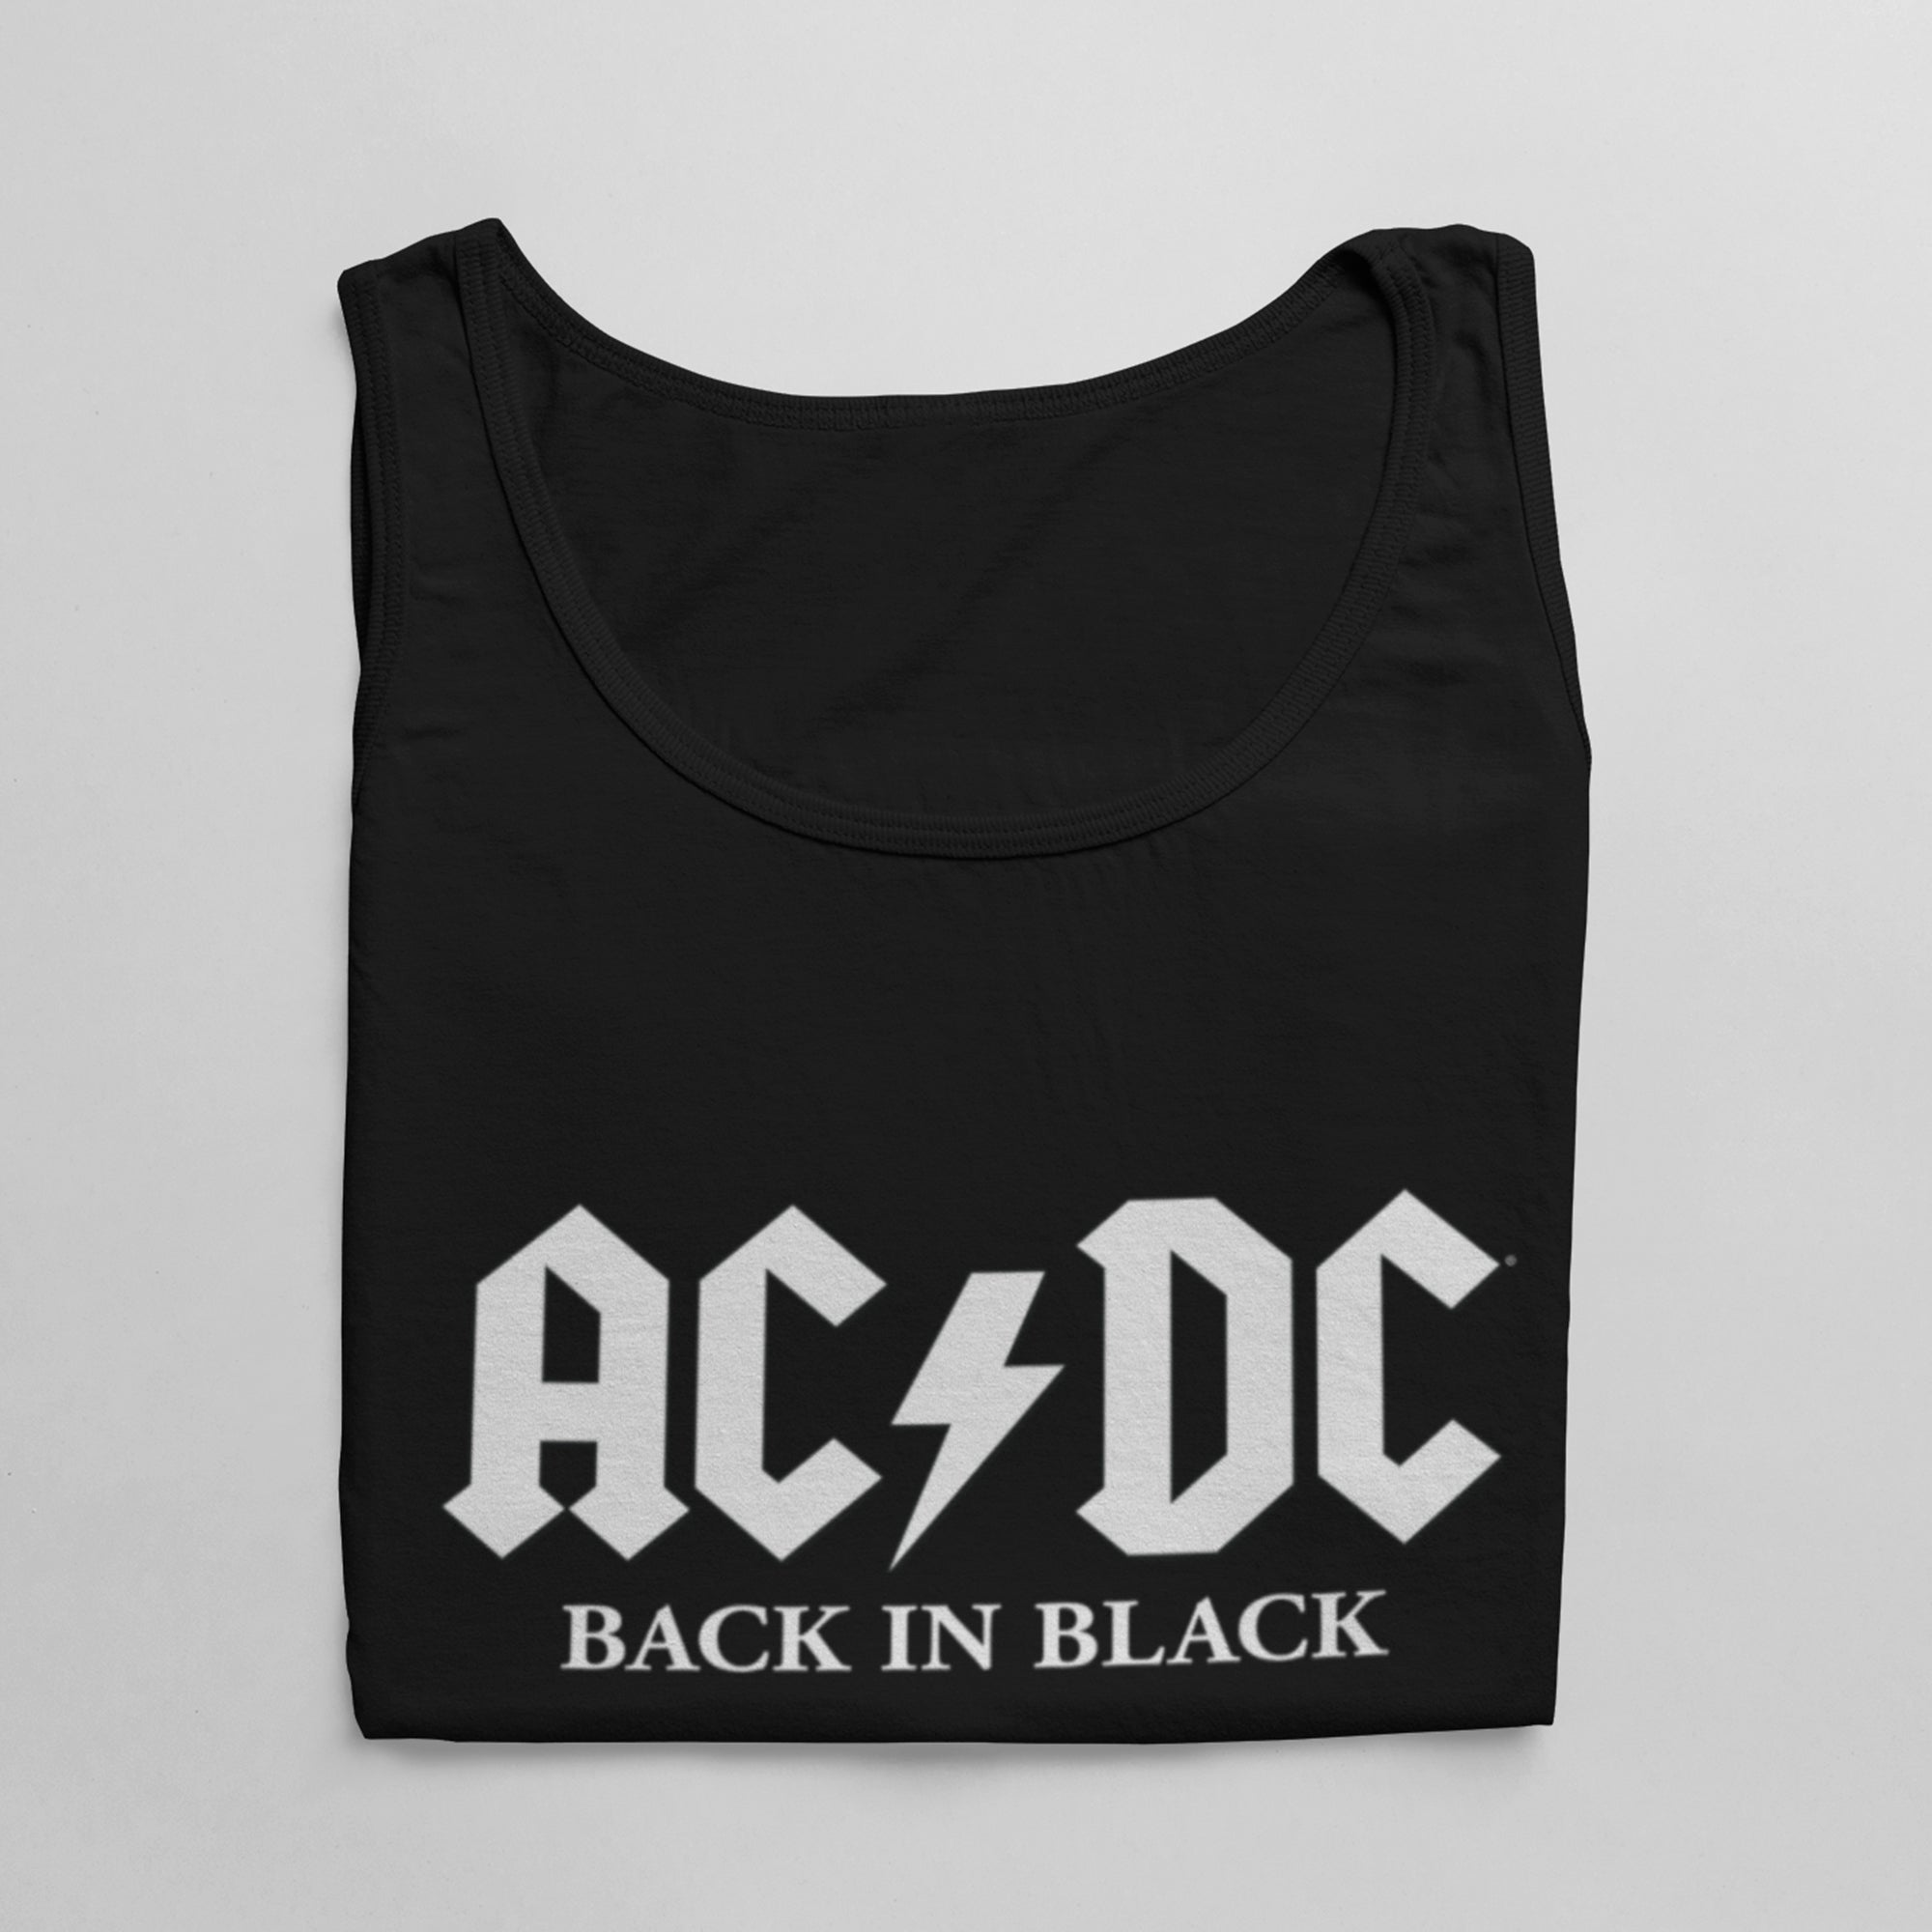 ACDC Men's Black T-shirt | HD Print T-Shirt - Nolan West